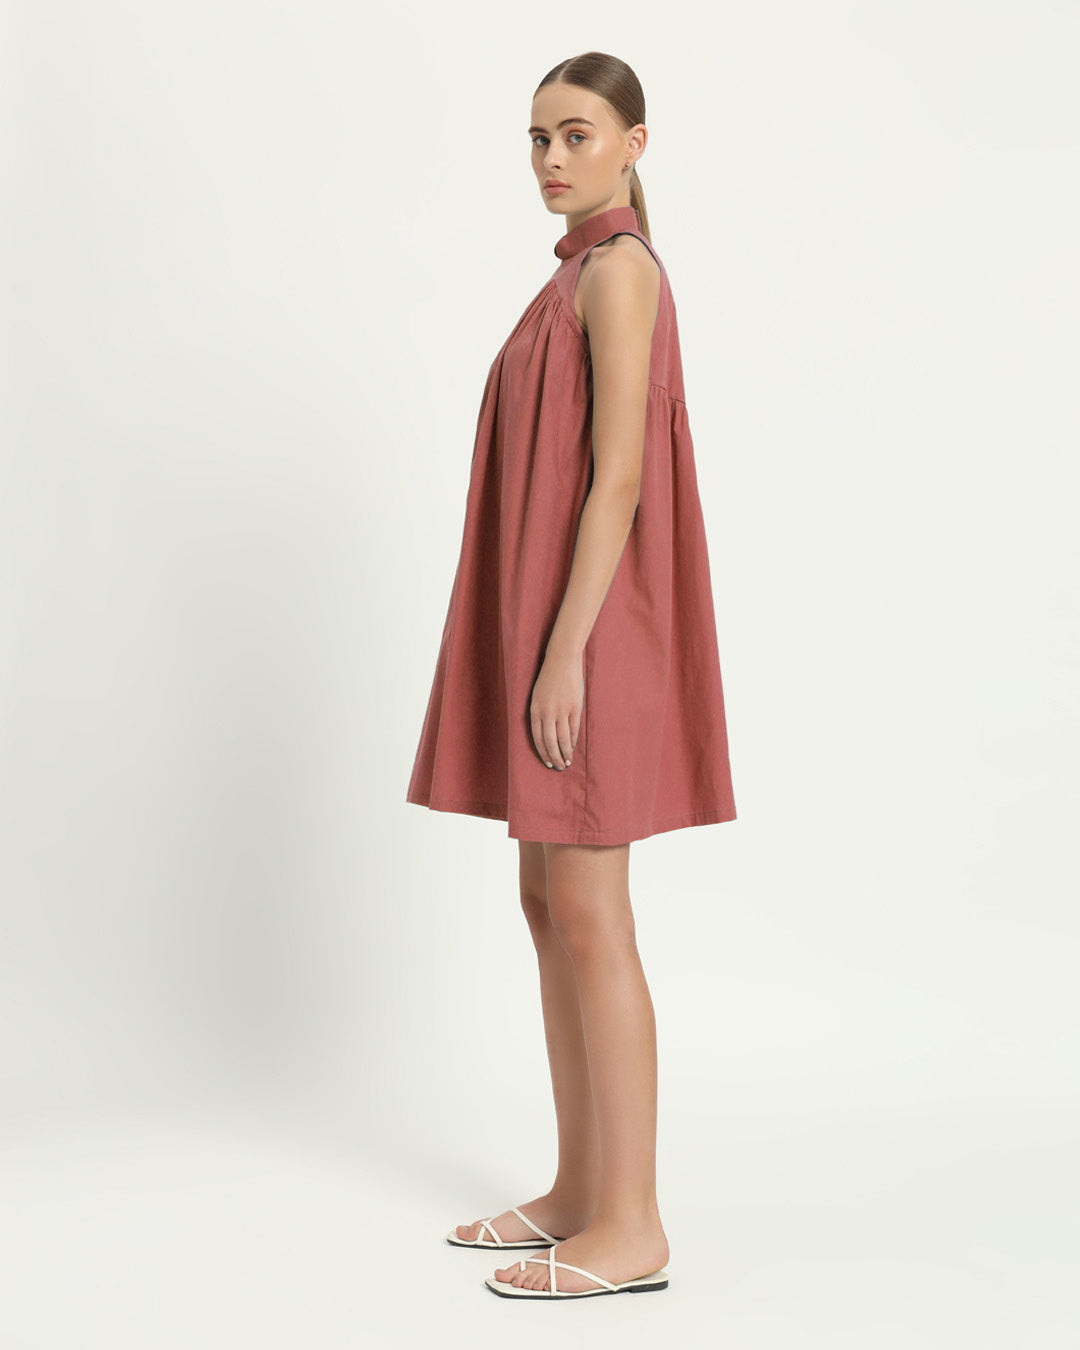 The Eruft Ivory Pink Cotton Dress